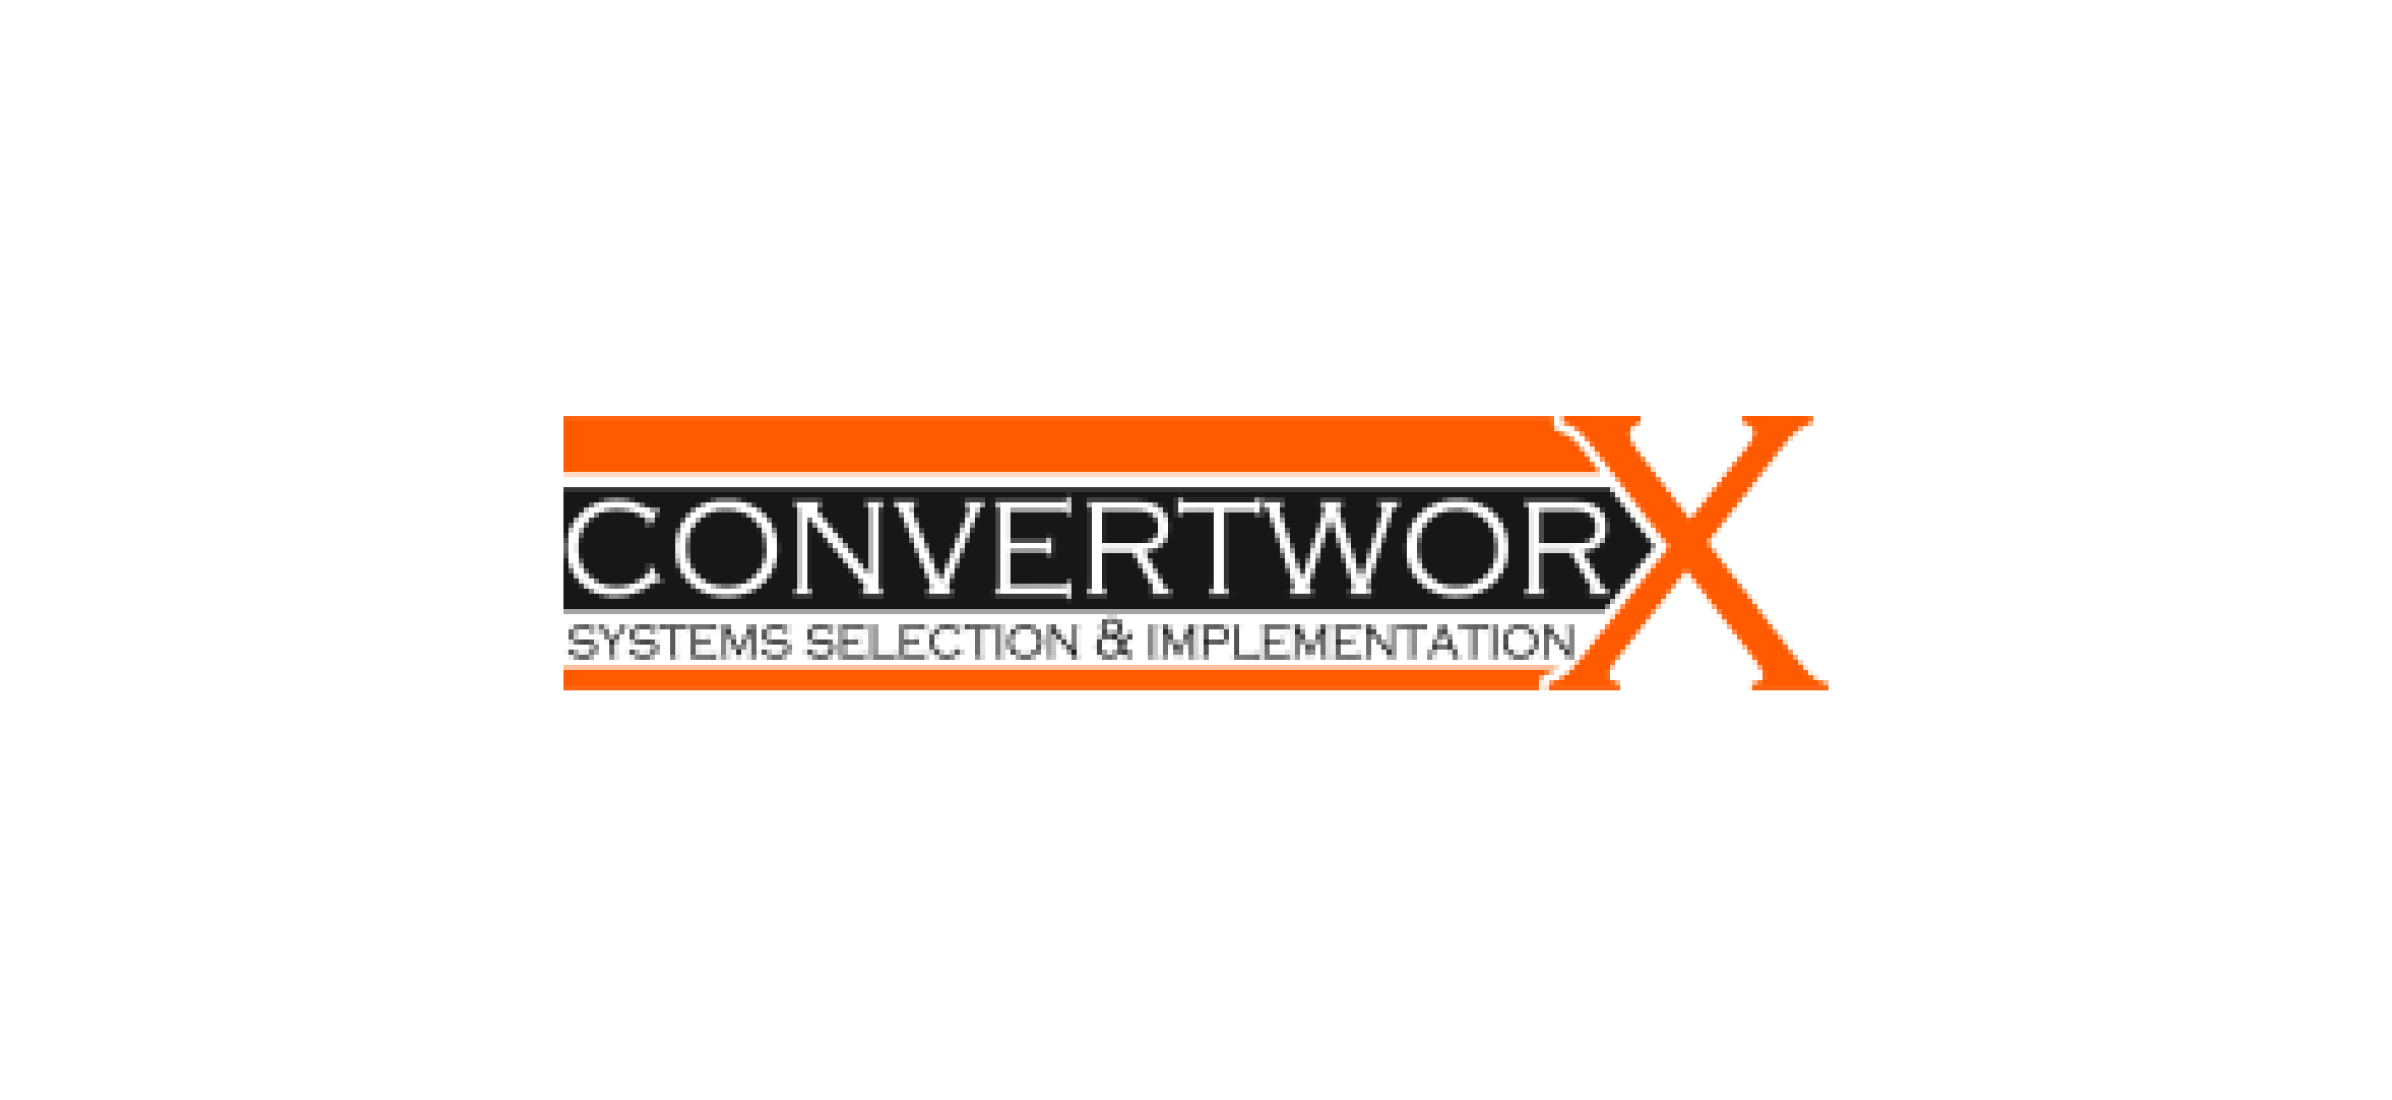 The Convertworx logo